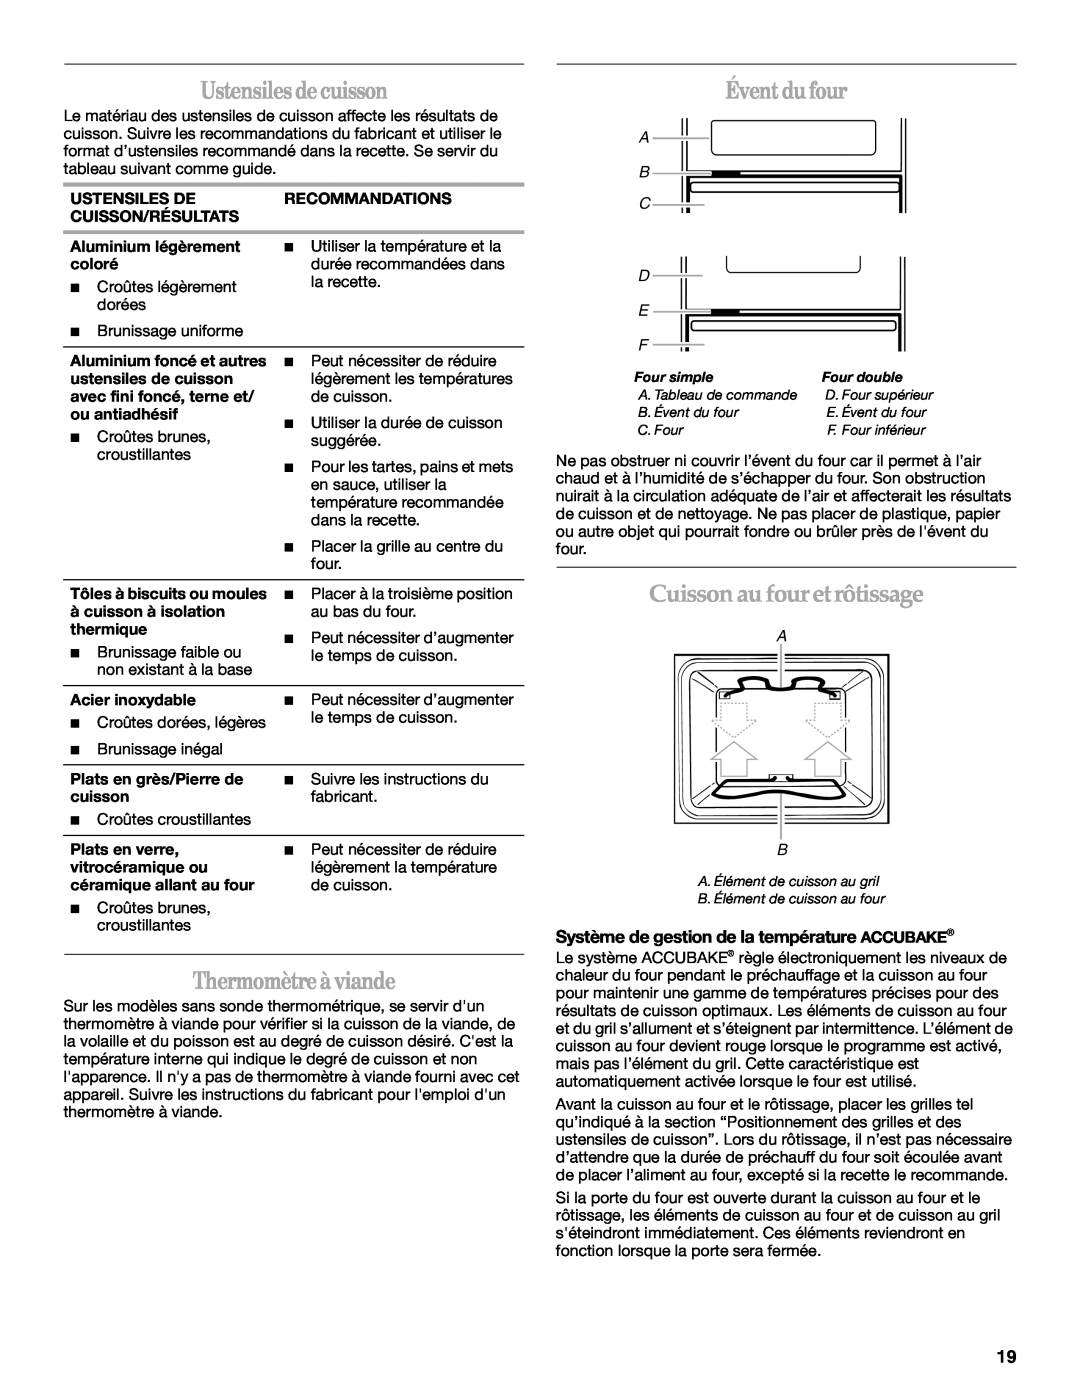 Whirlpool RBS275PV manual Ustensiles decuisson, Thermomètreà viande, Éventdufour, Cuisson aufouretrôtissage, A B C D E F 